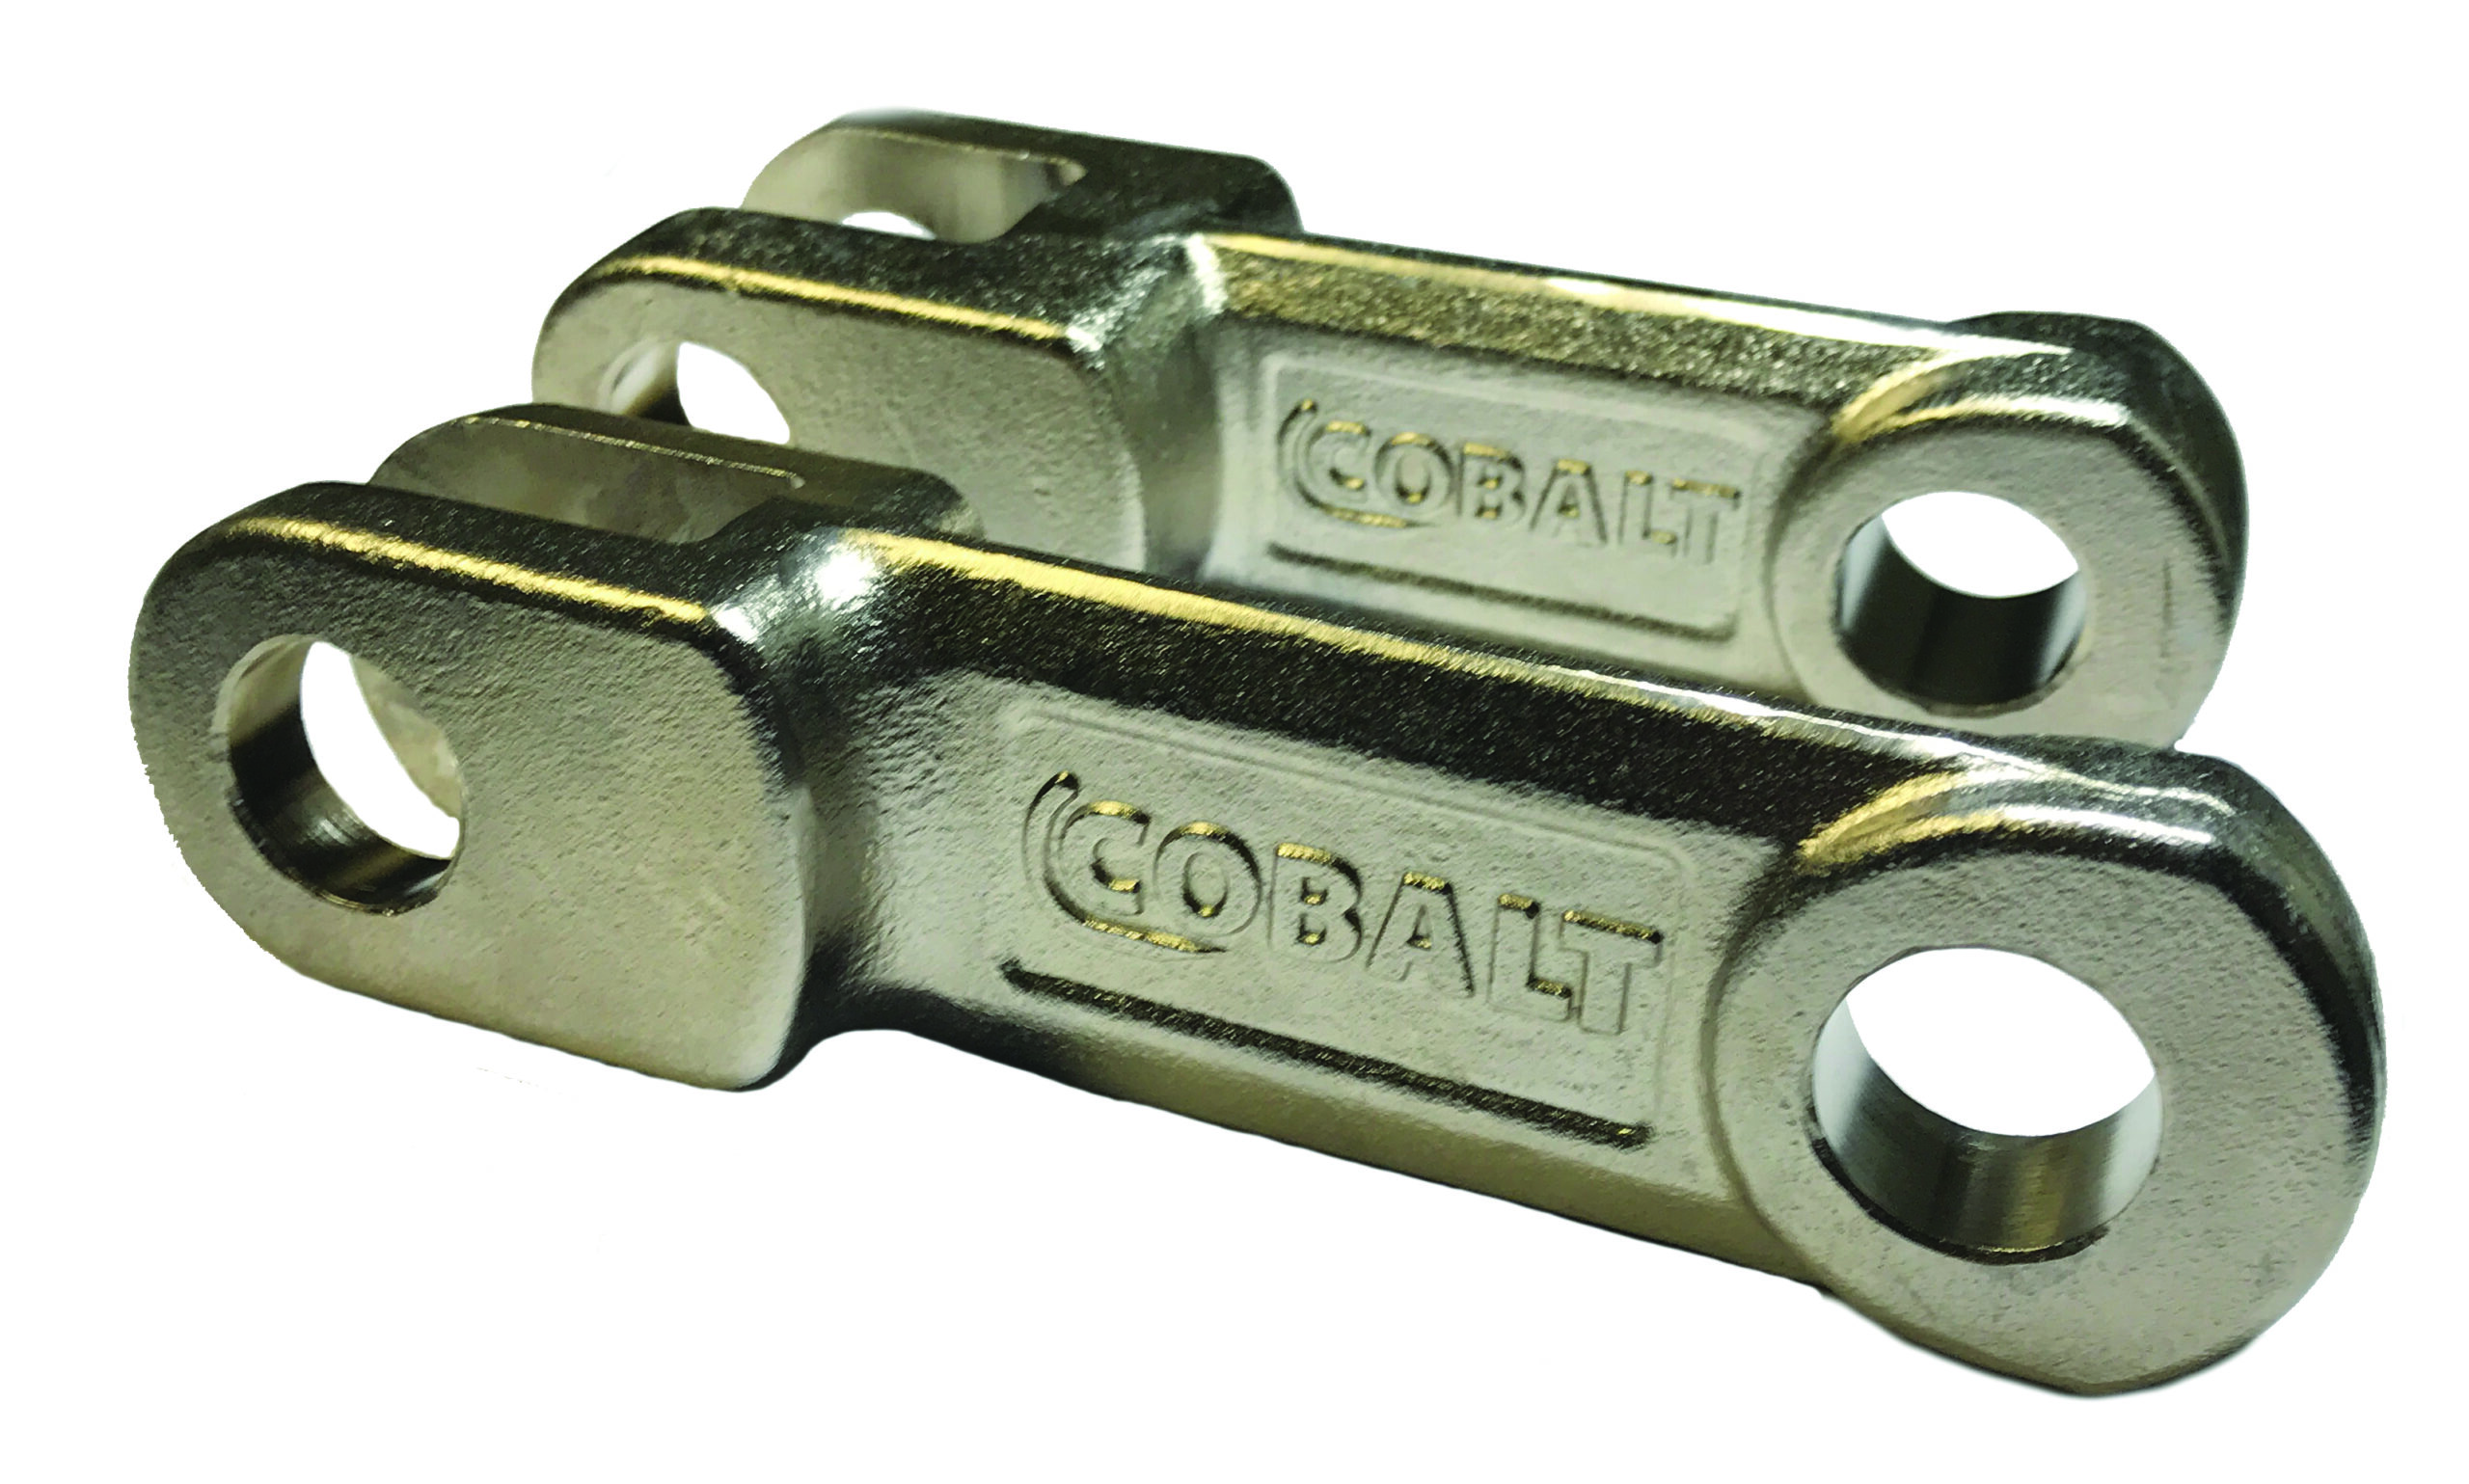 Cobalt Chains